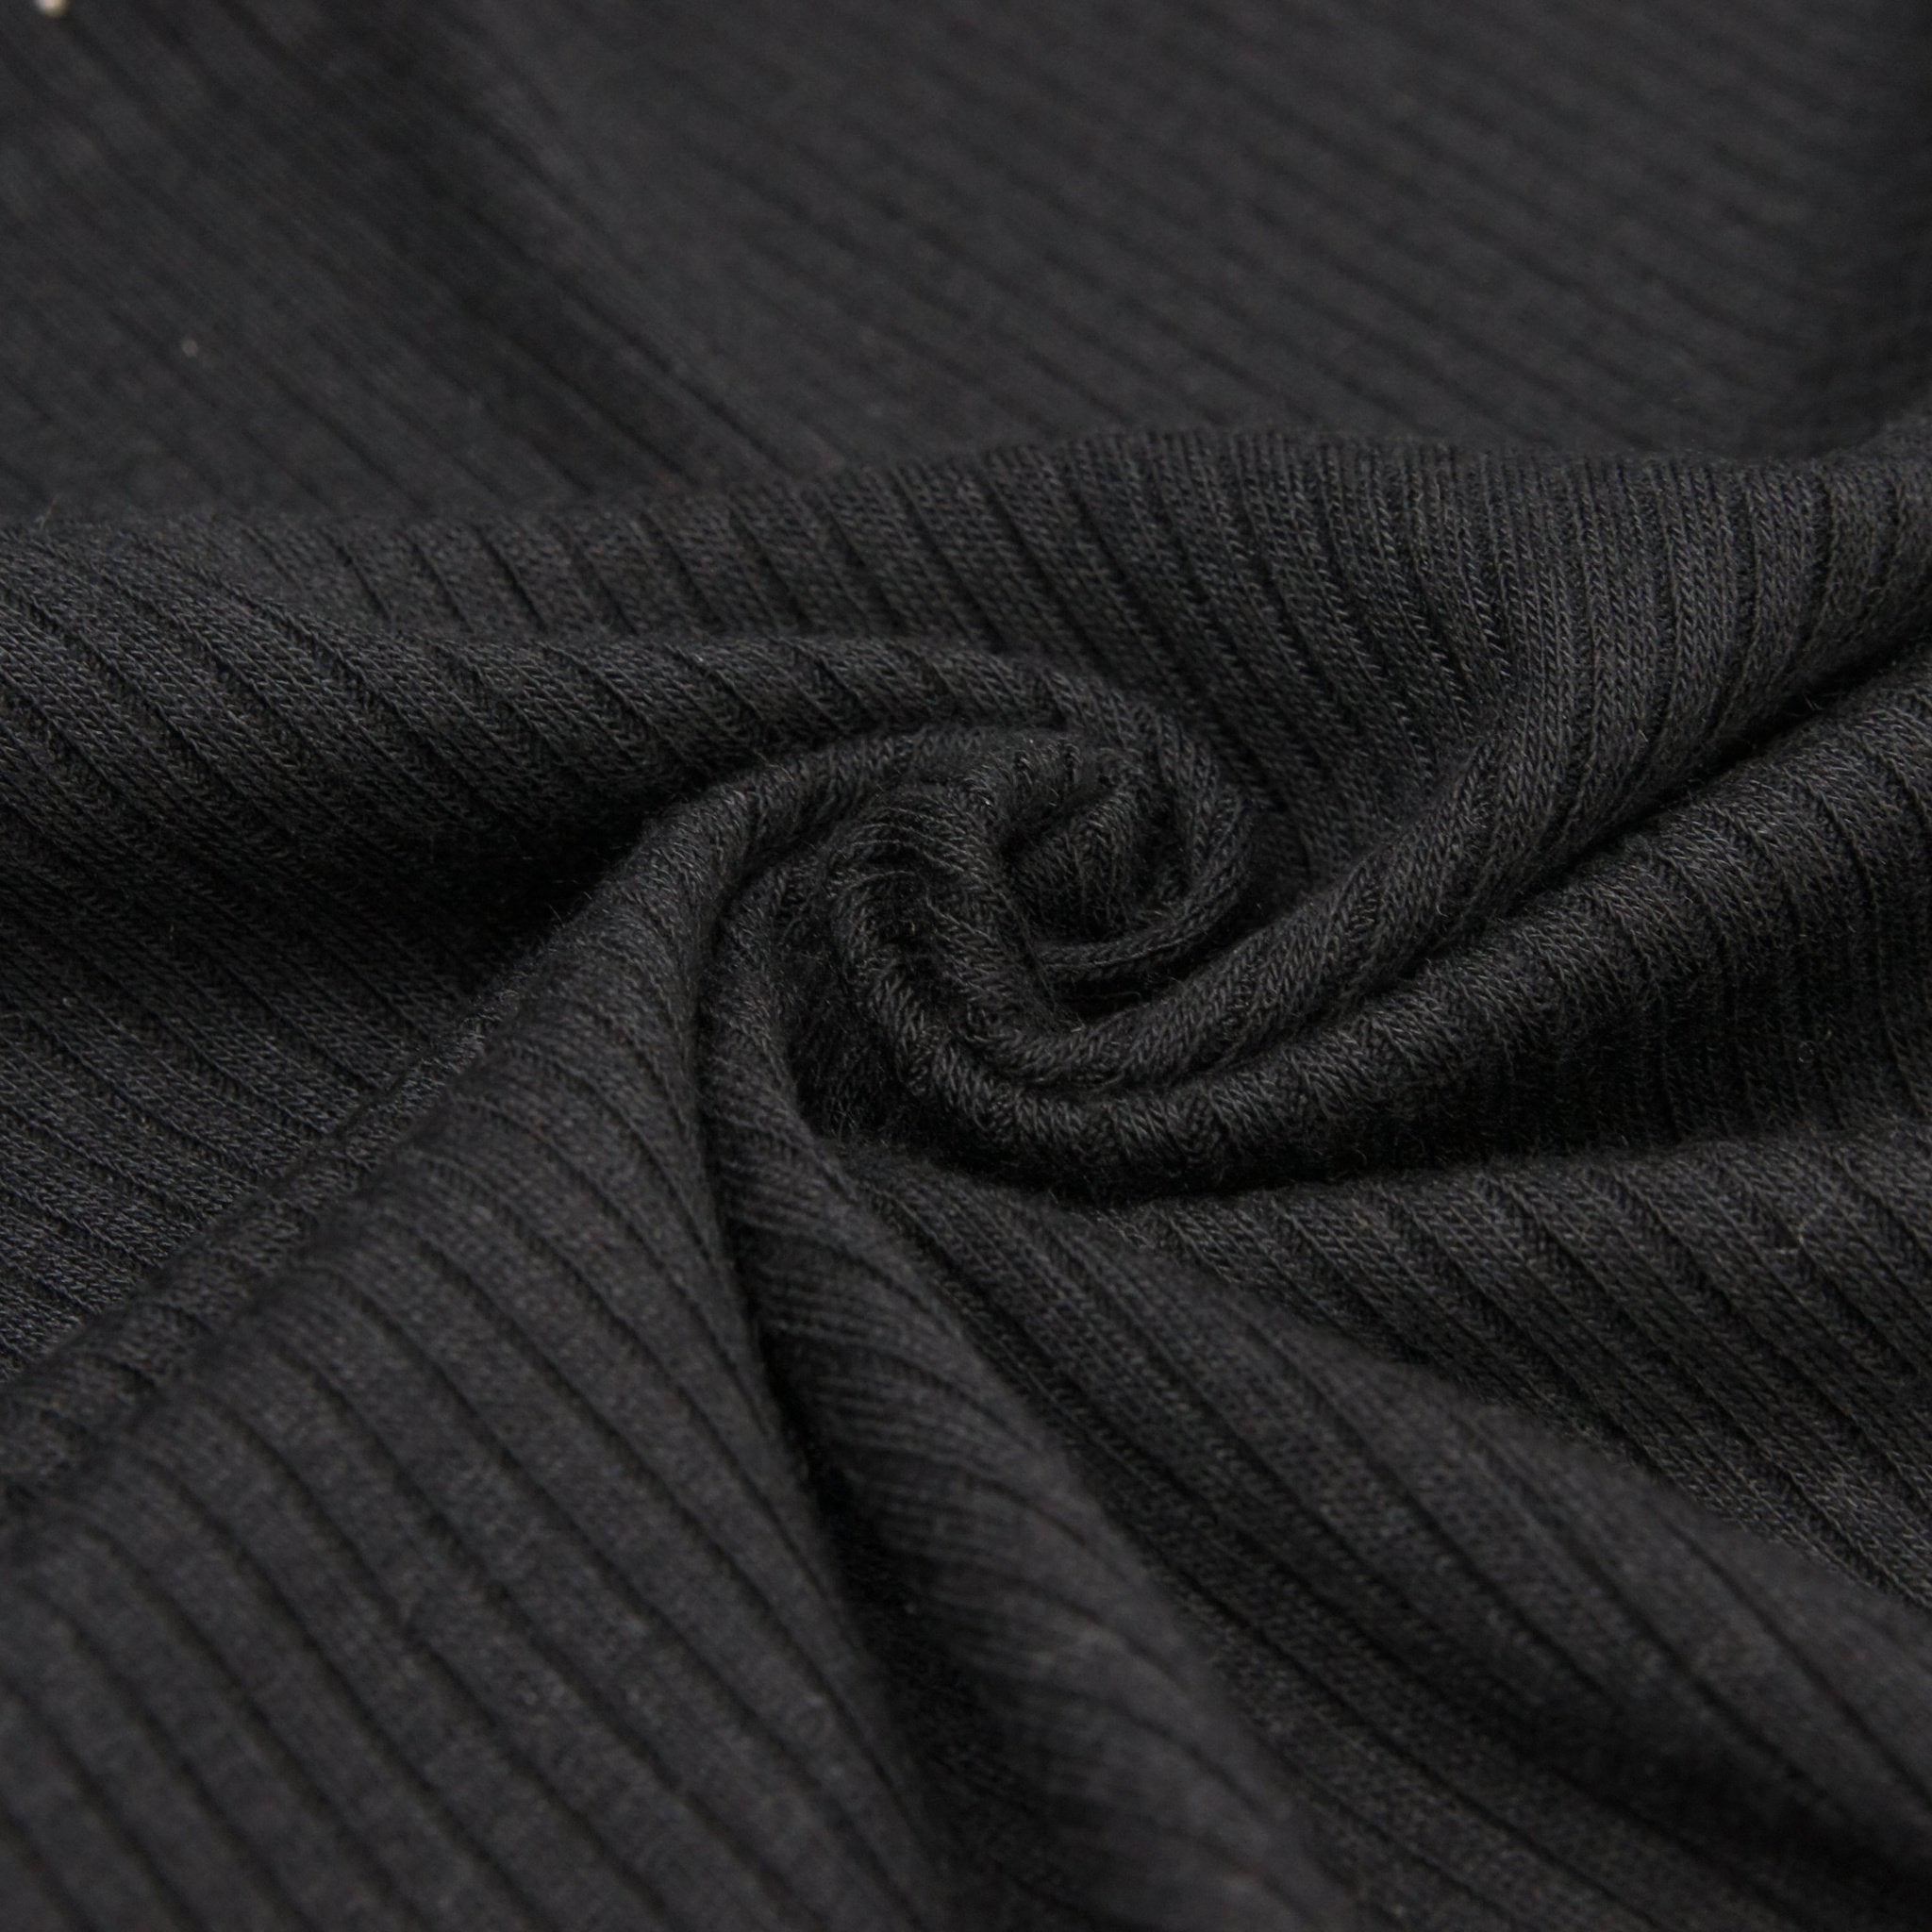 Tencel Modal Spandex Ribbed Knit - Black